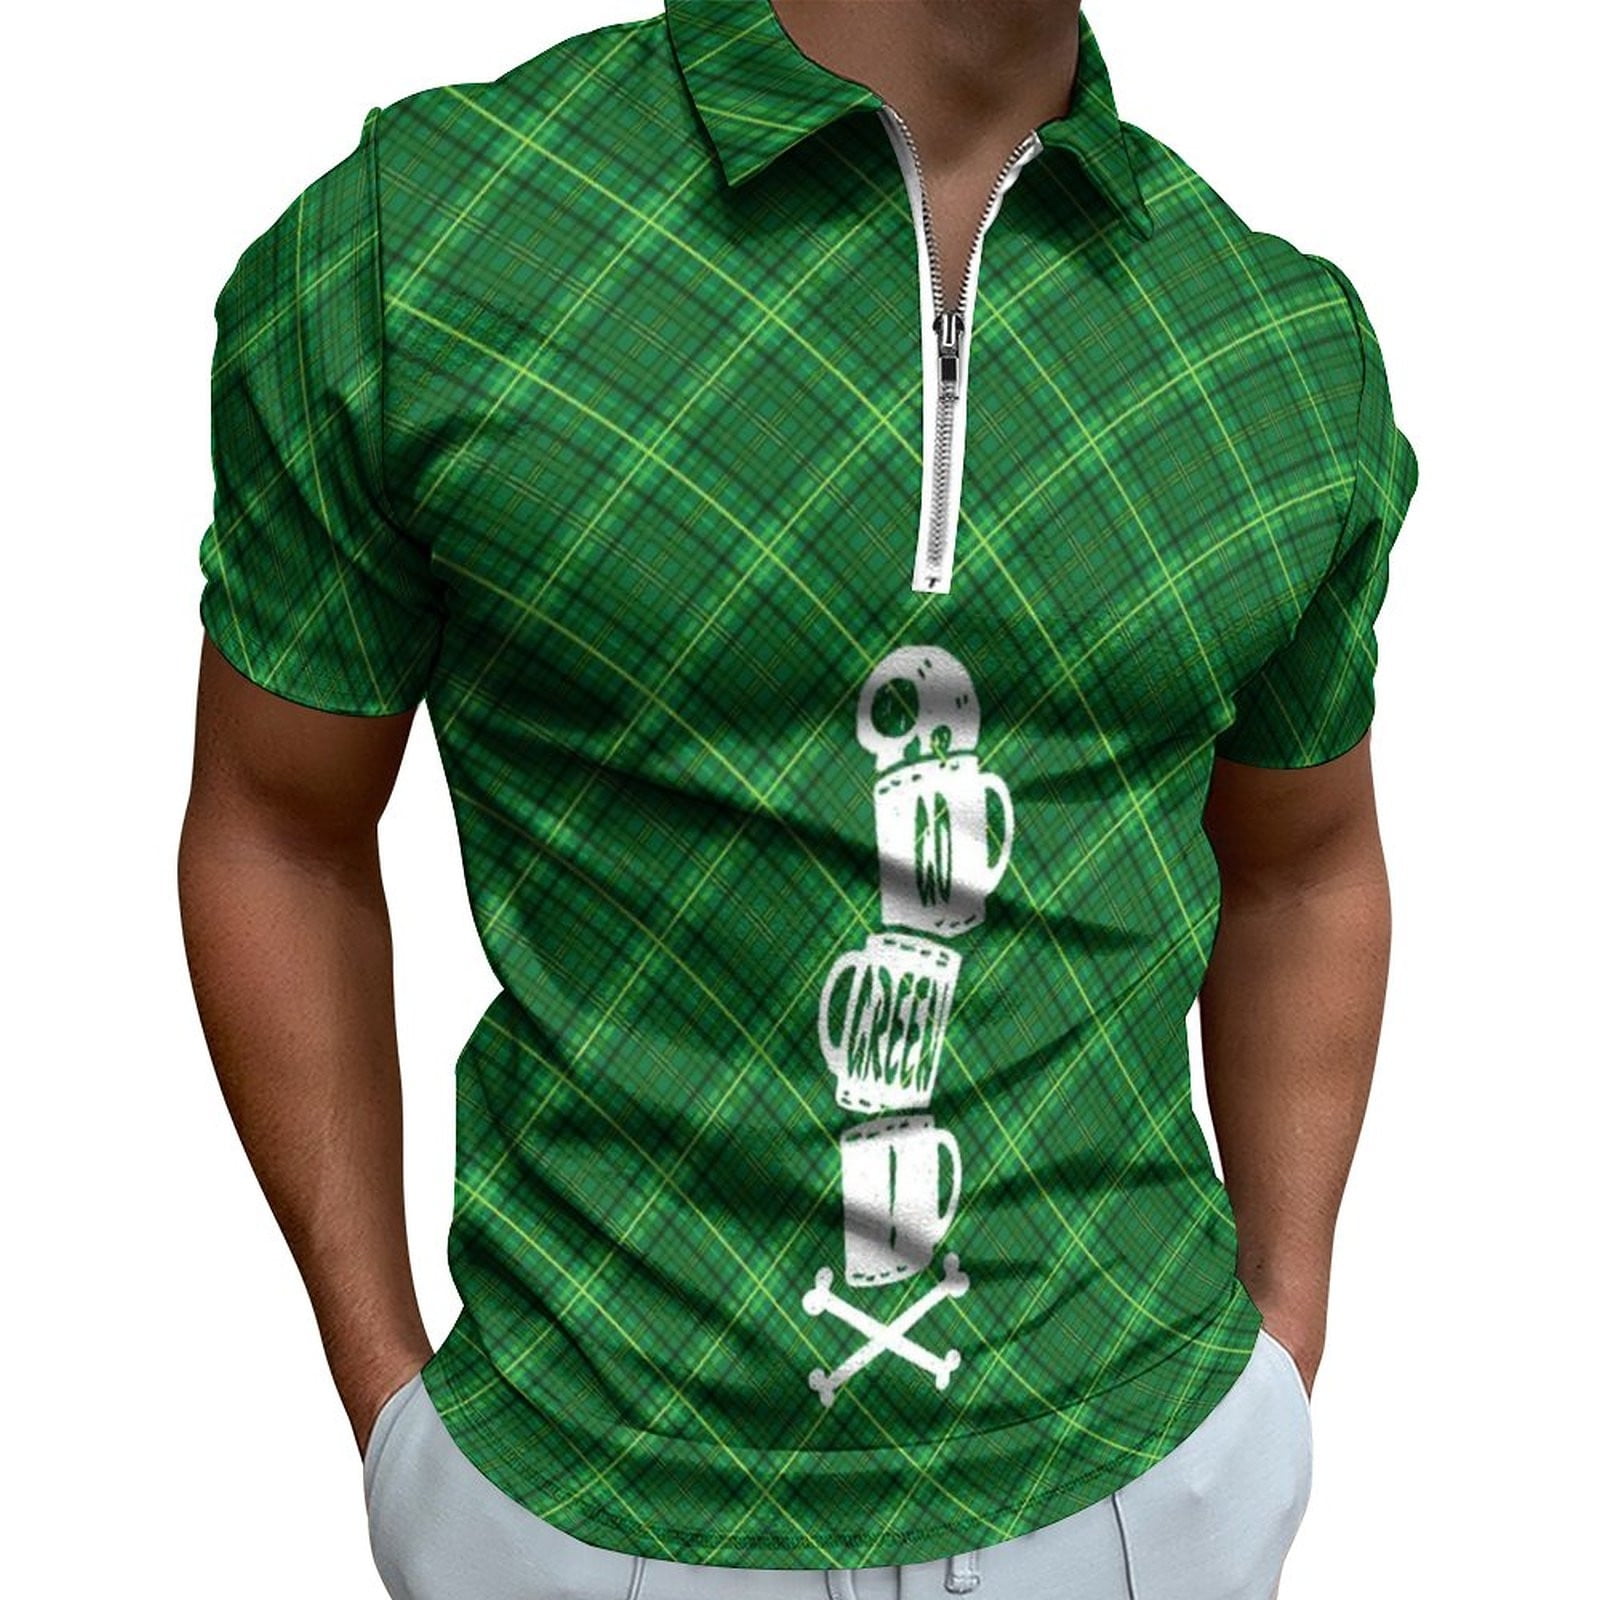 Pedort Linen Shirts For Men Golf Shirts for Men Dry Fit Moisture ...